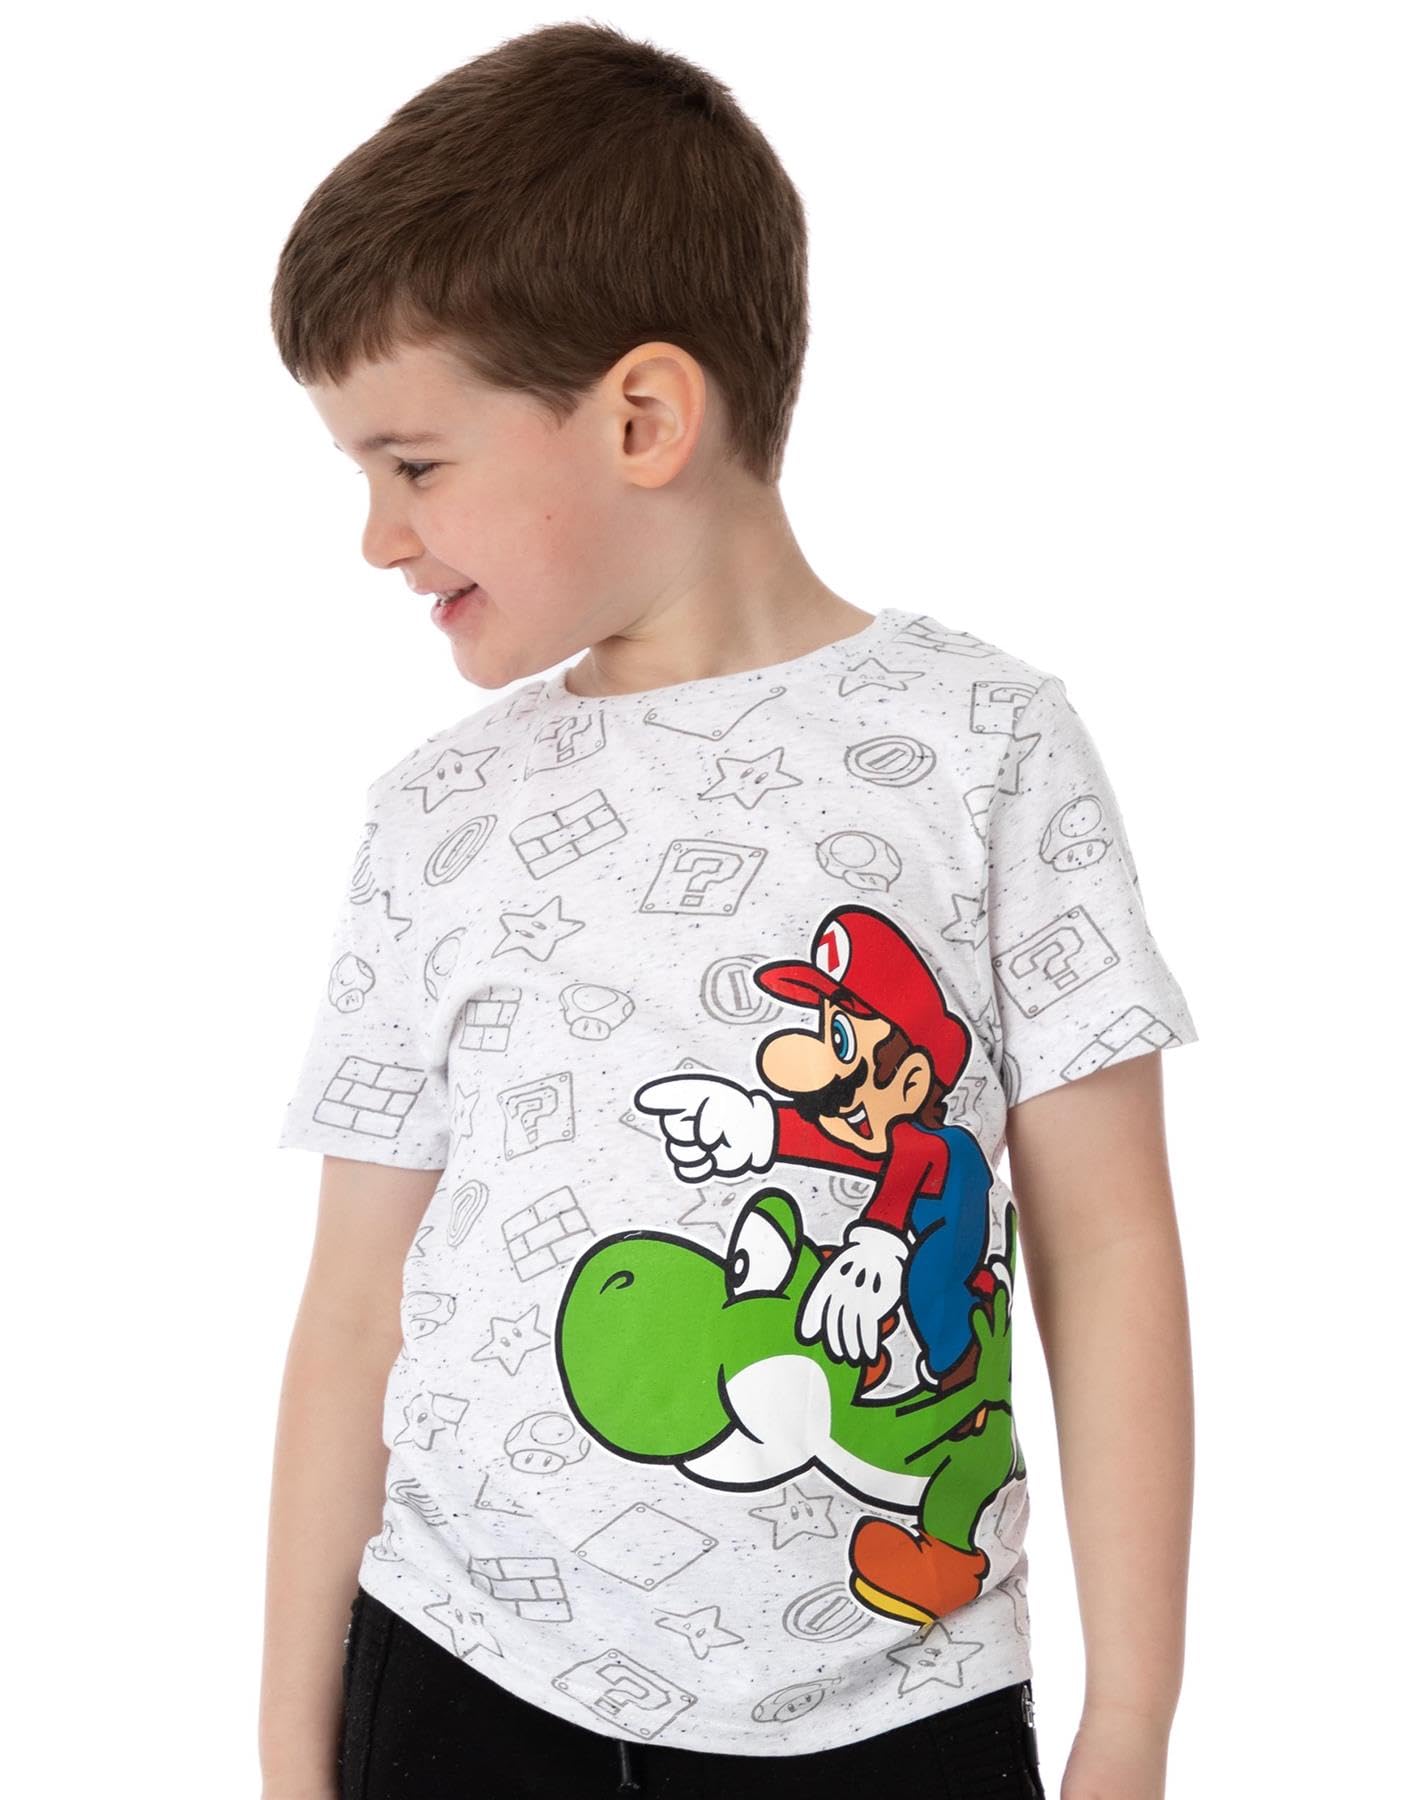 Super Mario Nintendo and Yoshi Boy's Kids Grey Character T-Shirt Top